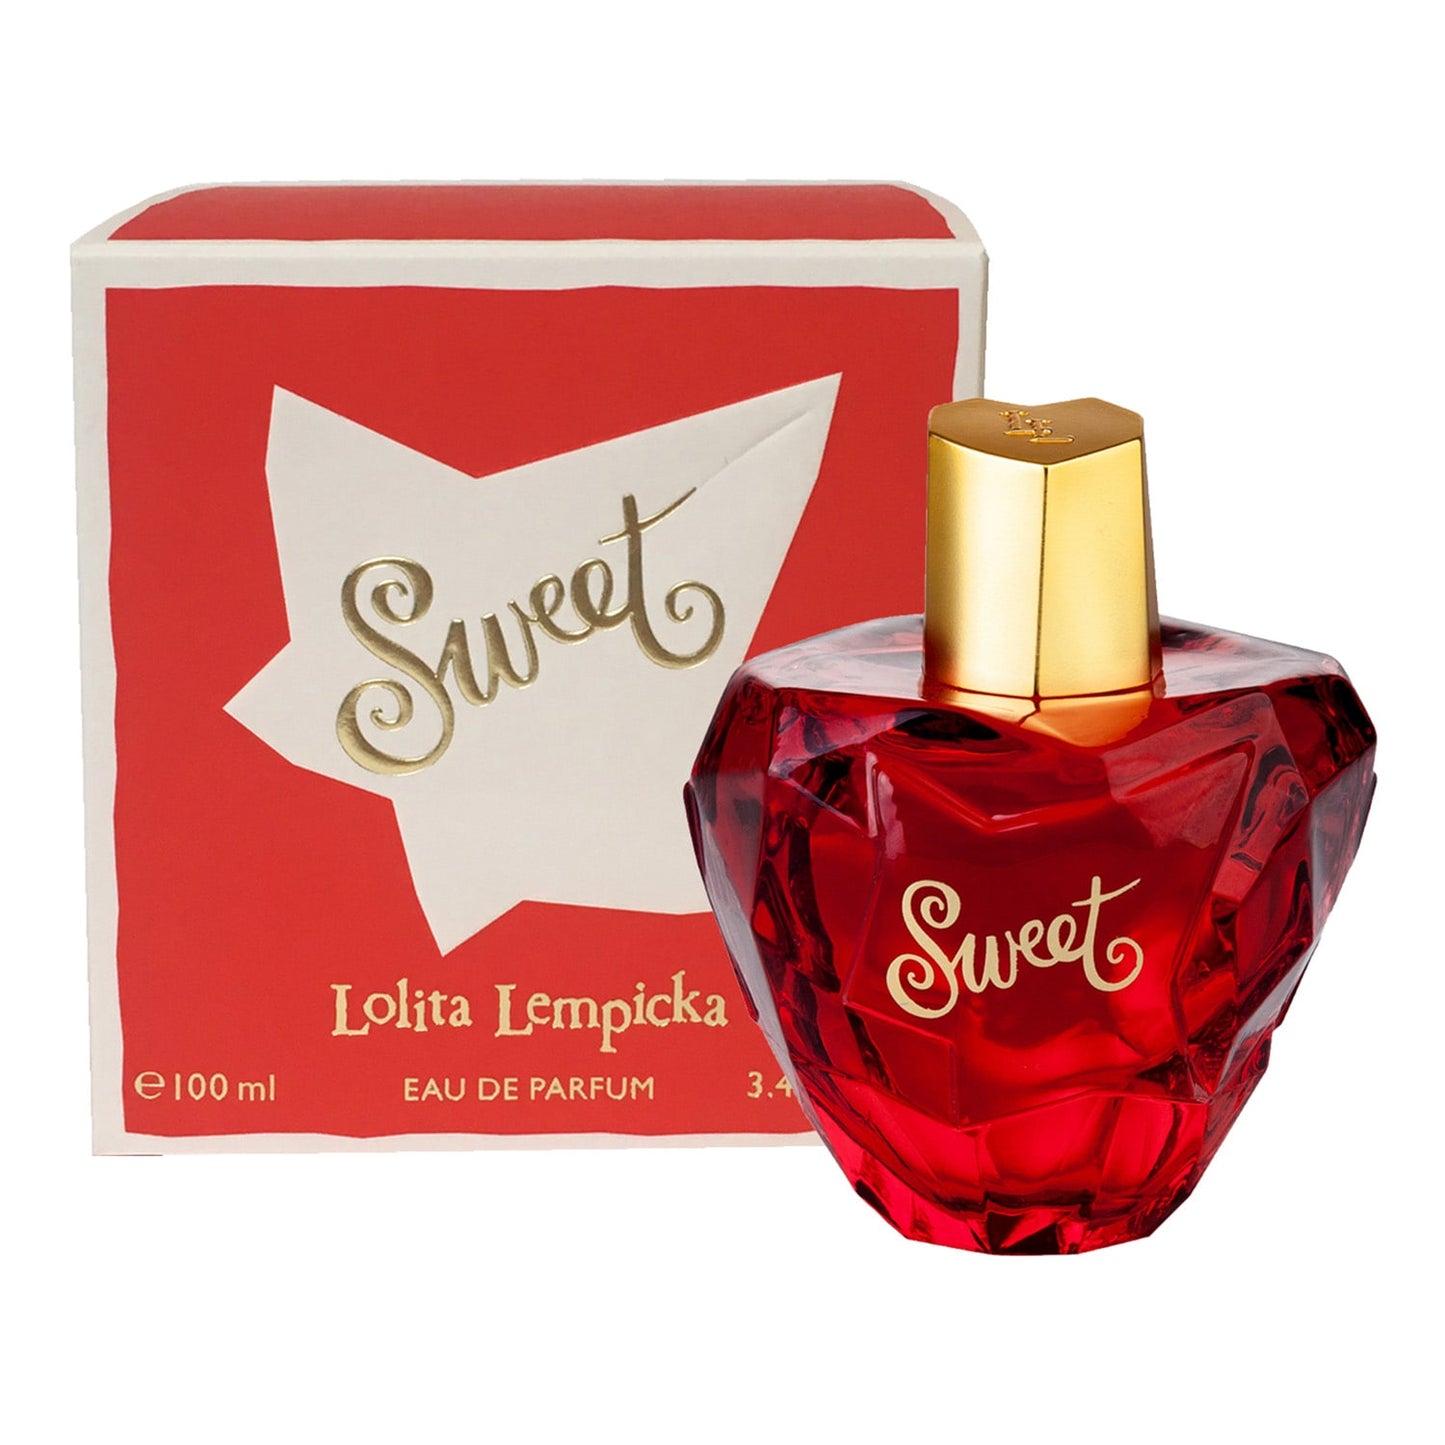 Sweet Lolita Lempicka eau de parfum 100ml